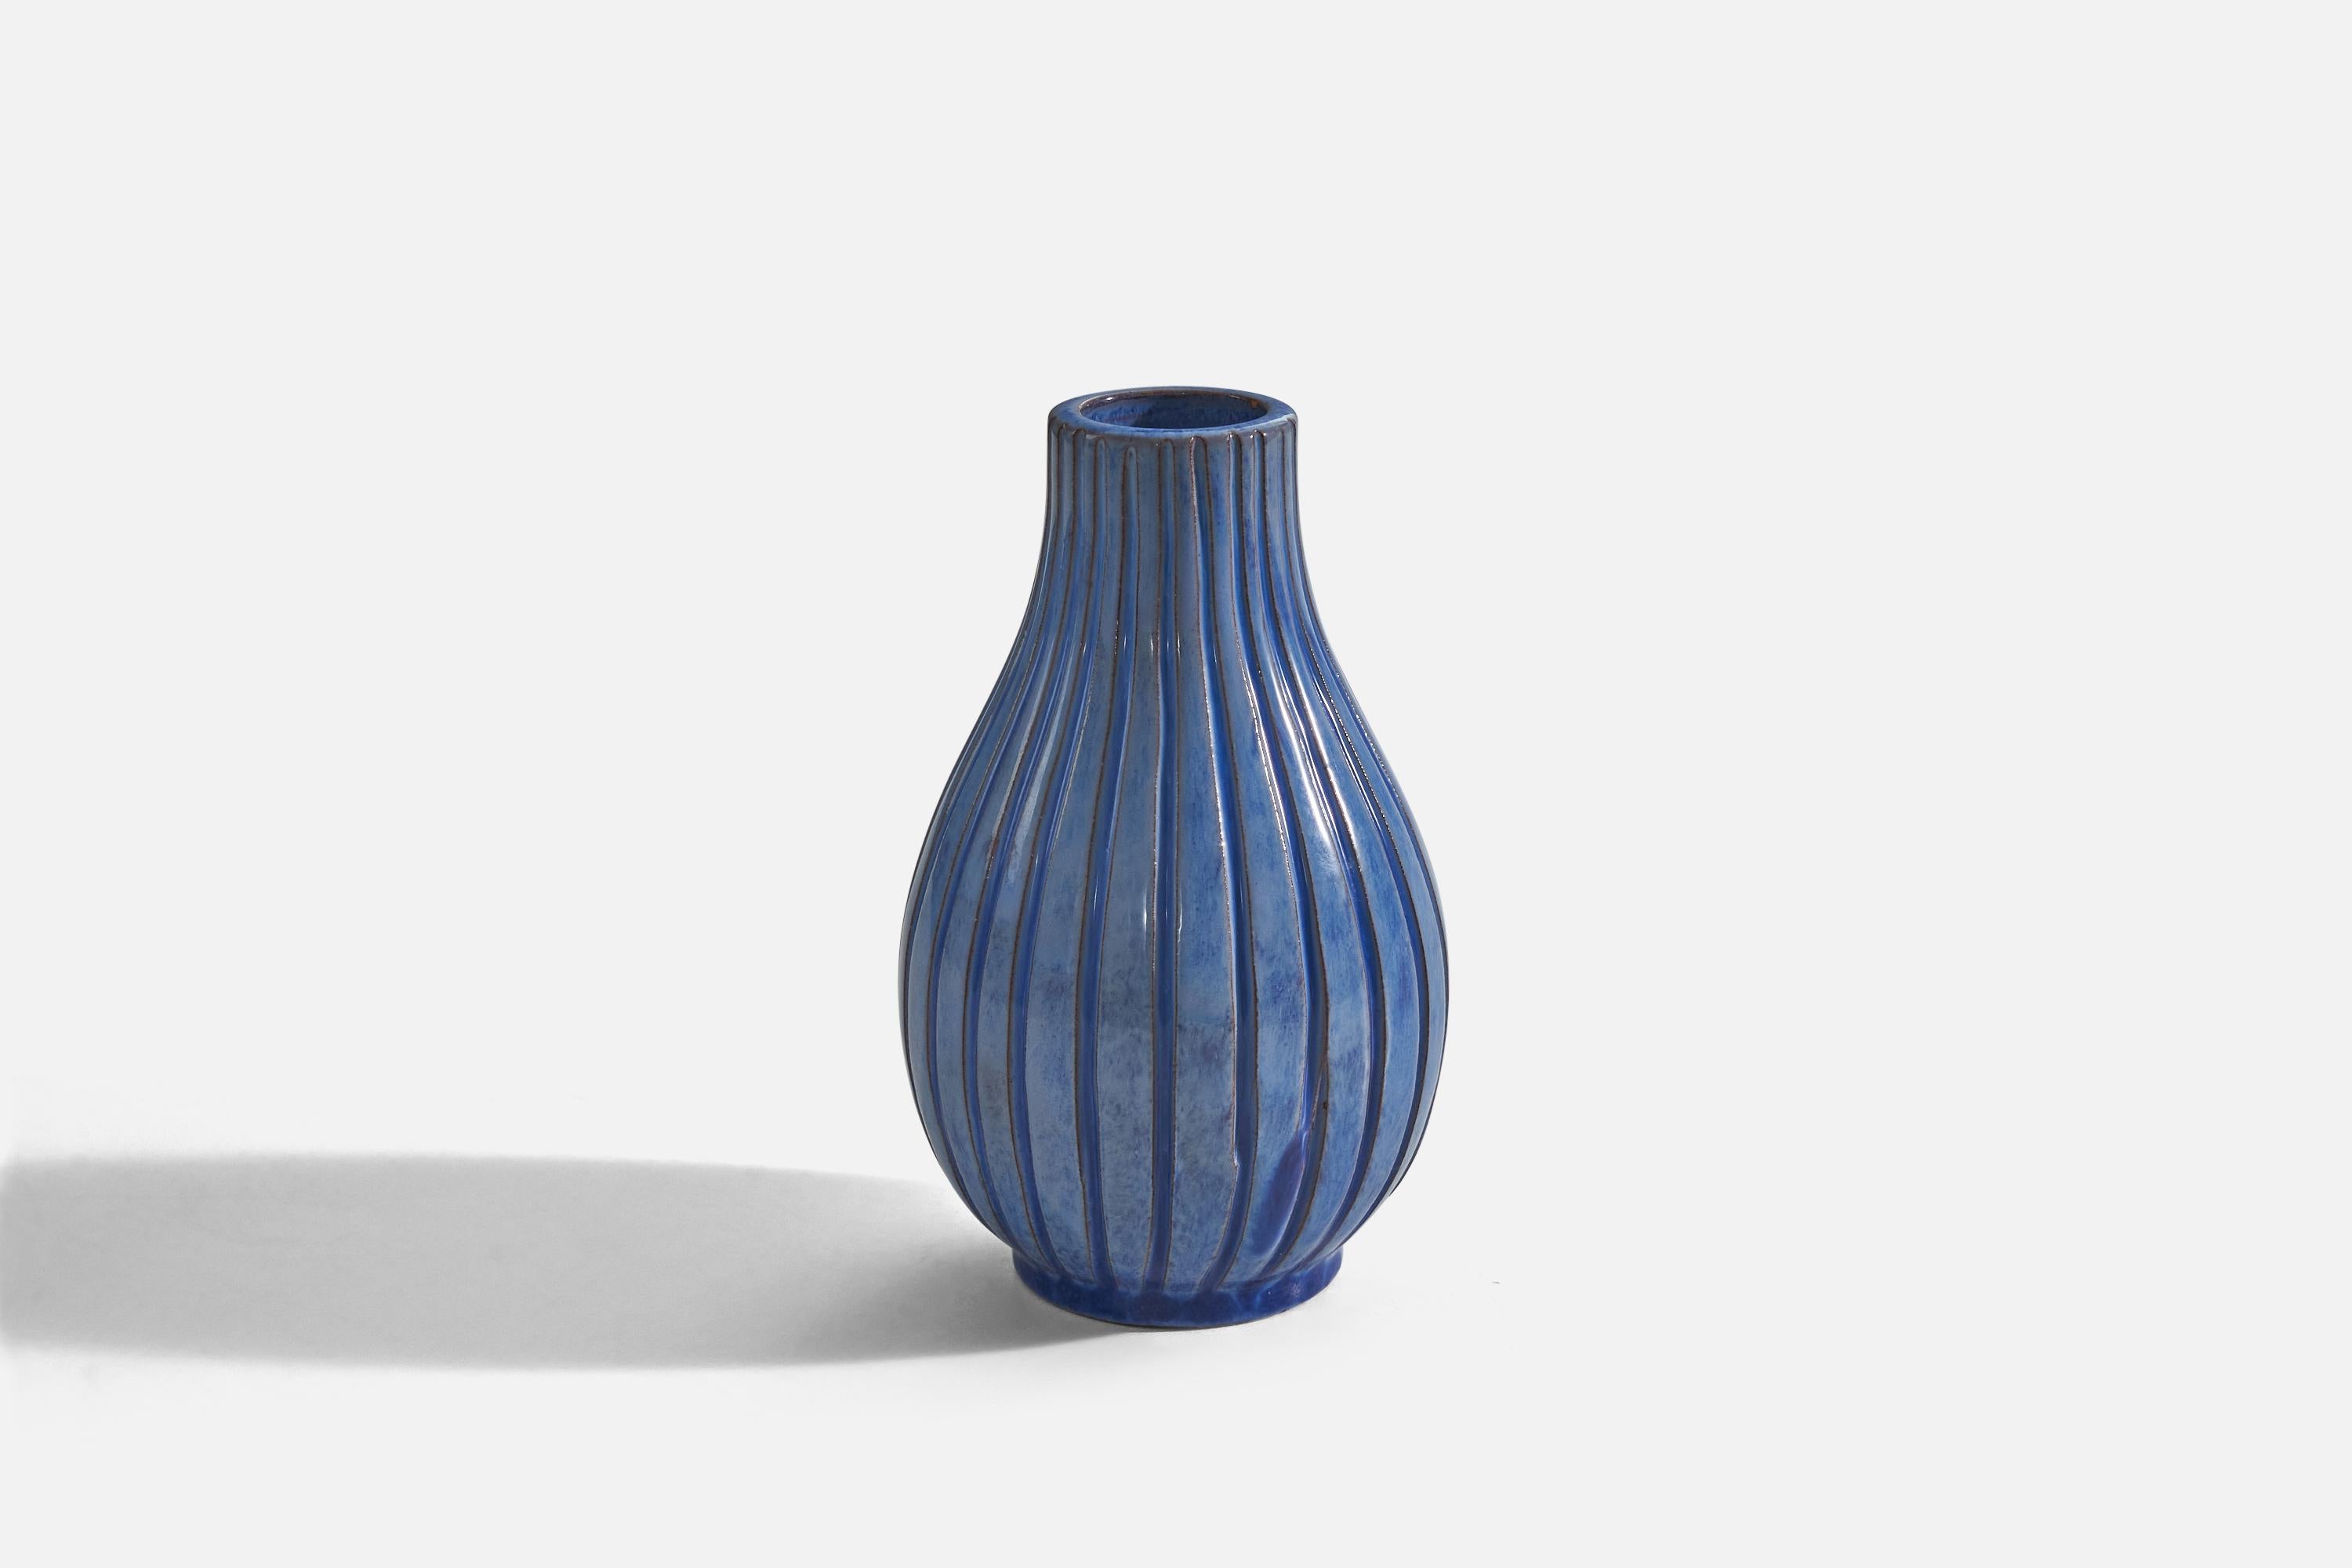 A blue-glazed earthenware vase designed by Vicke Lindstrand and produced by Upsala-Ekeby, Sweden, 1940s. 

